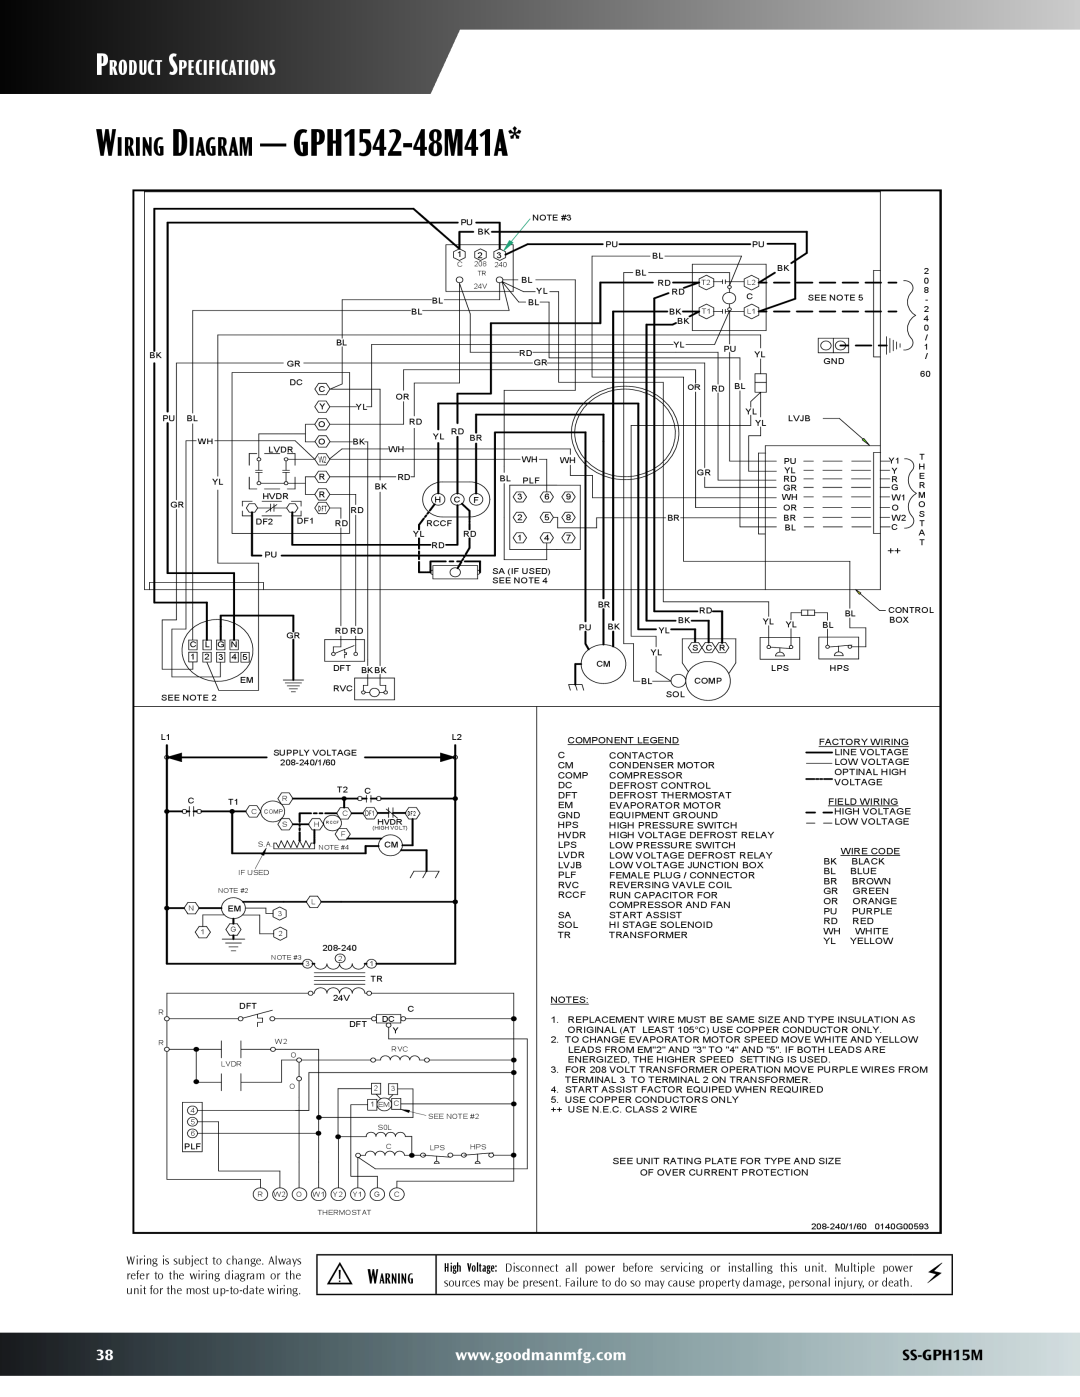 Goodman Mfg warranty Wiring Diagram — GPH1542-48M41A, Product Specifications, SS-GPH15M 